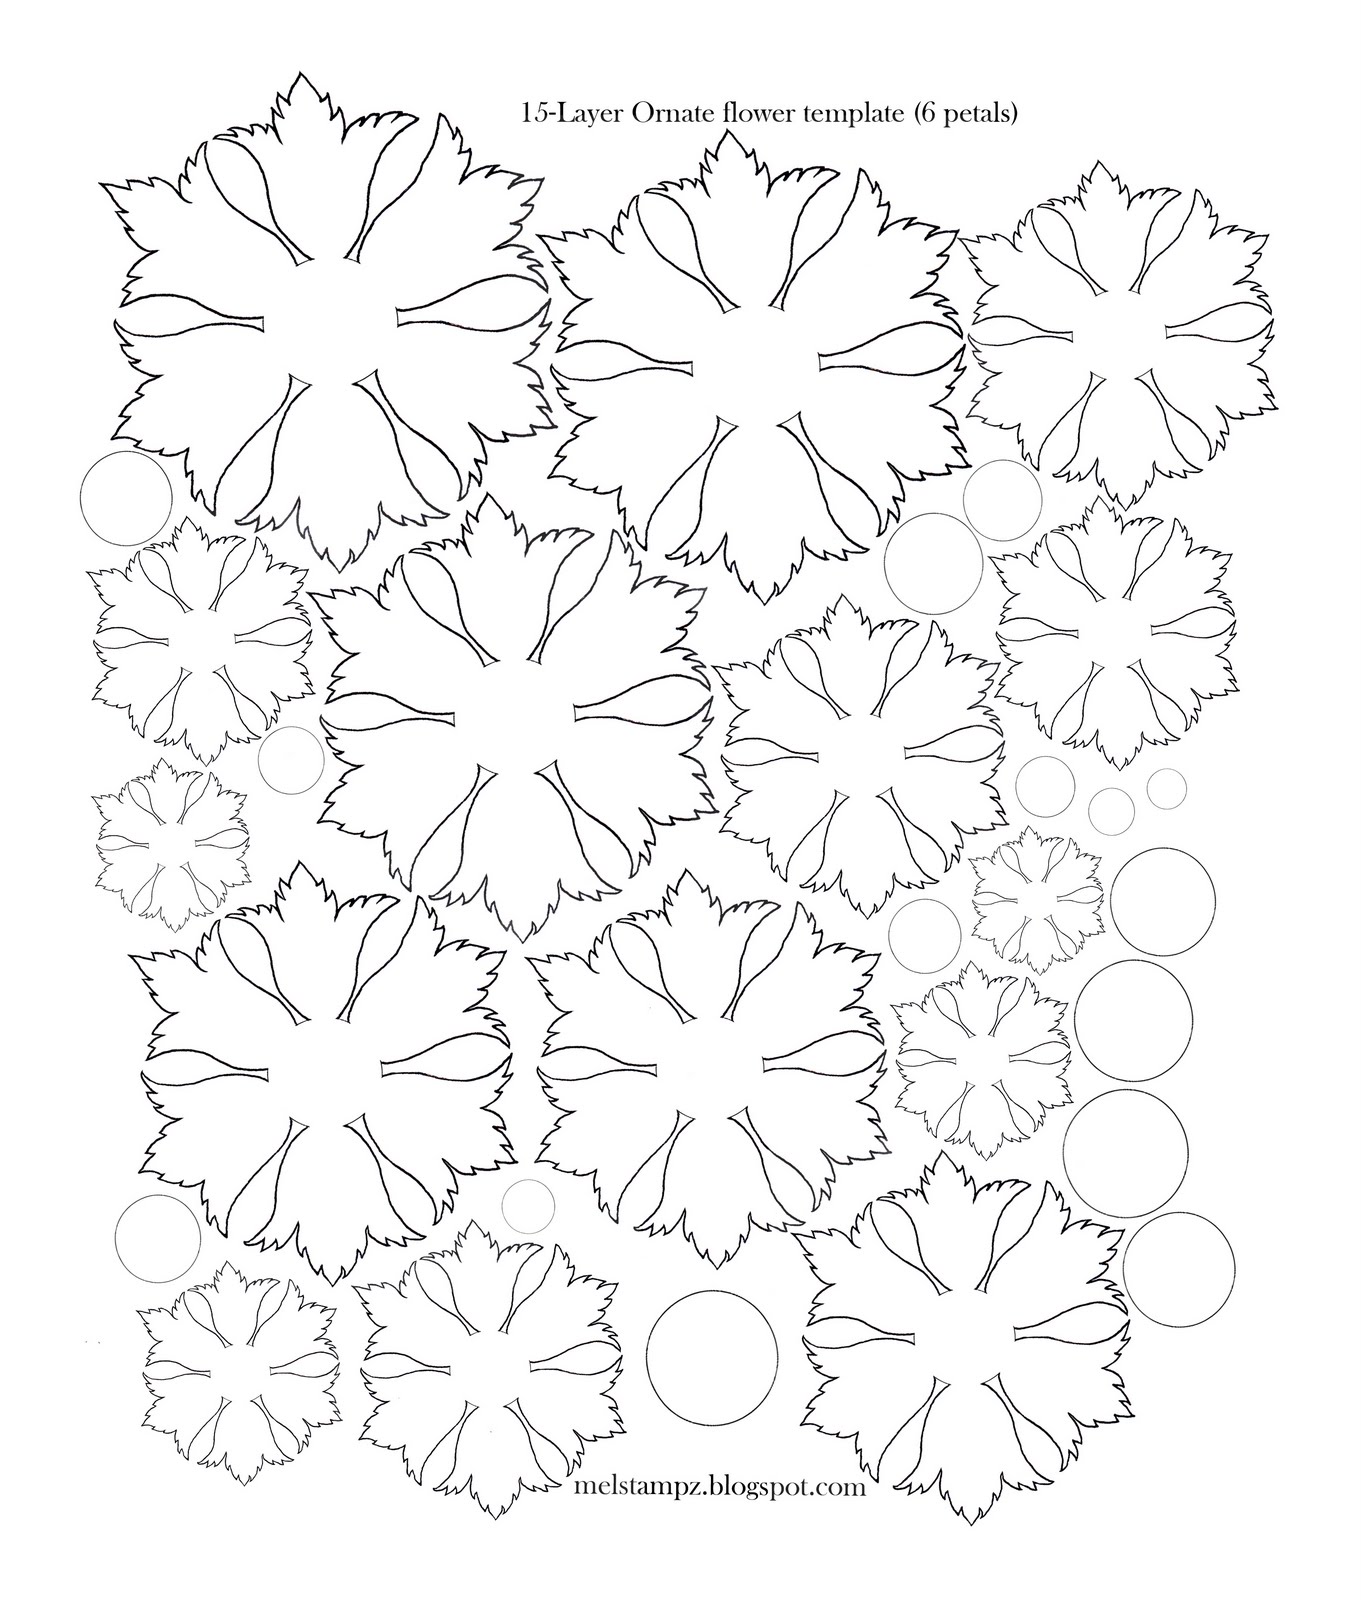 Mel Stampz: 6petal Ornate Flower template